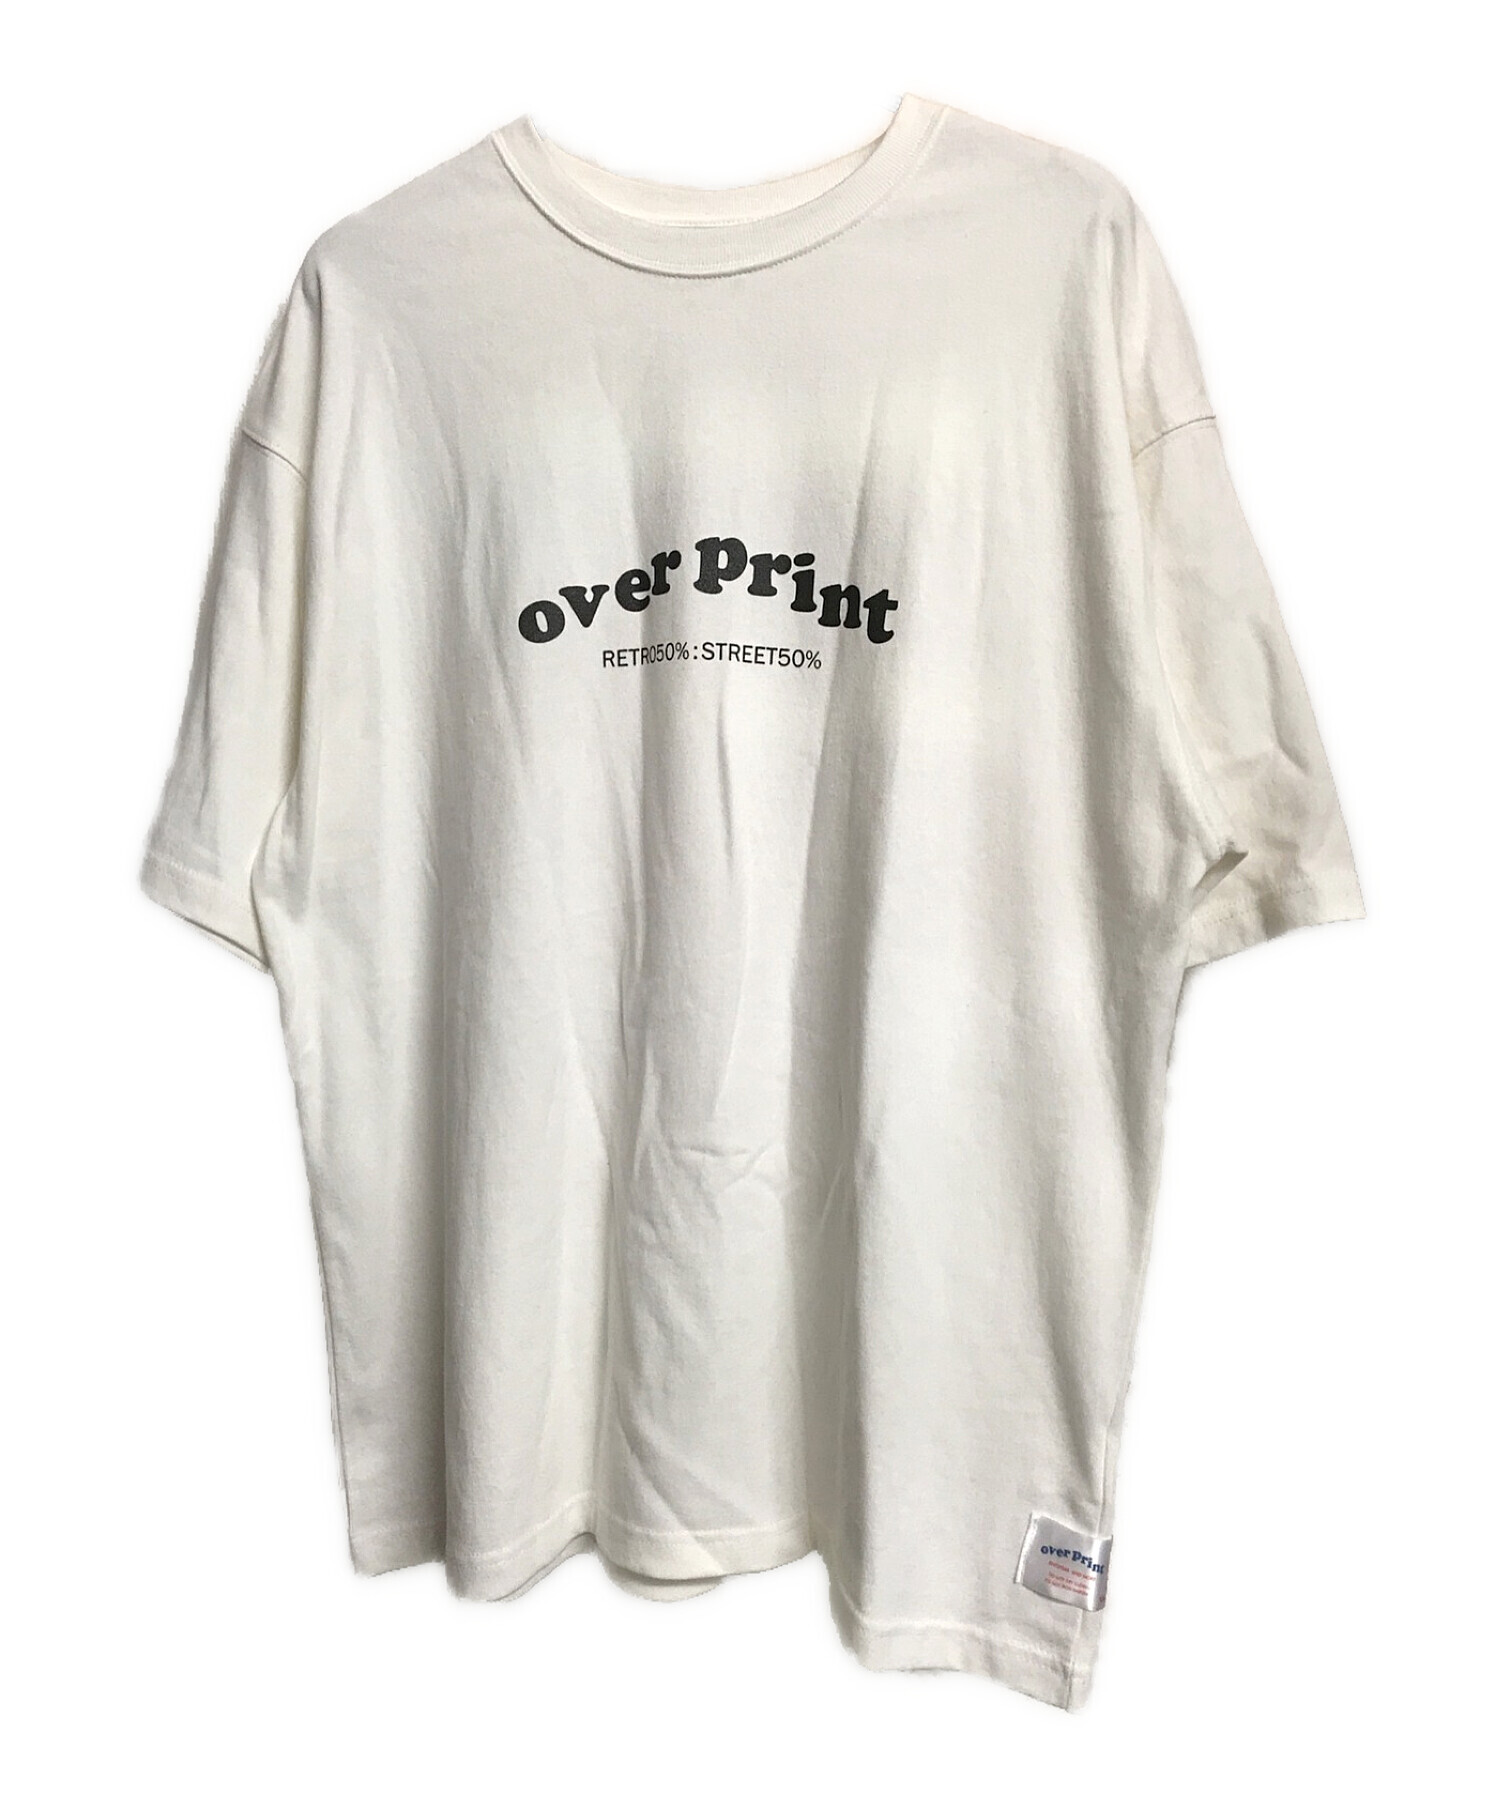 9090×over print (9090×オーバープリント) Tシャツ ホワイト サイズ:XL